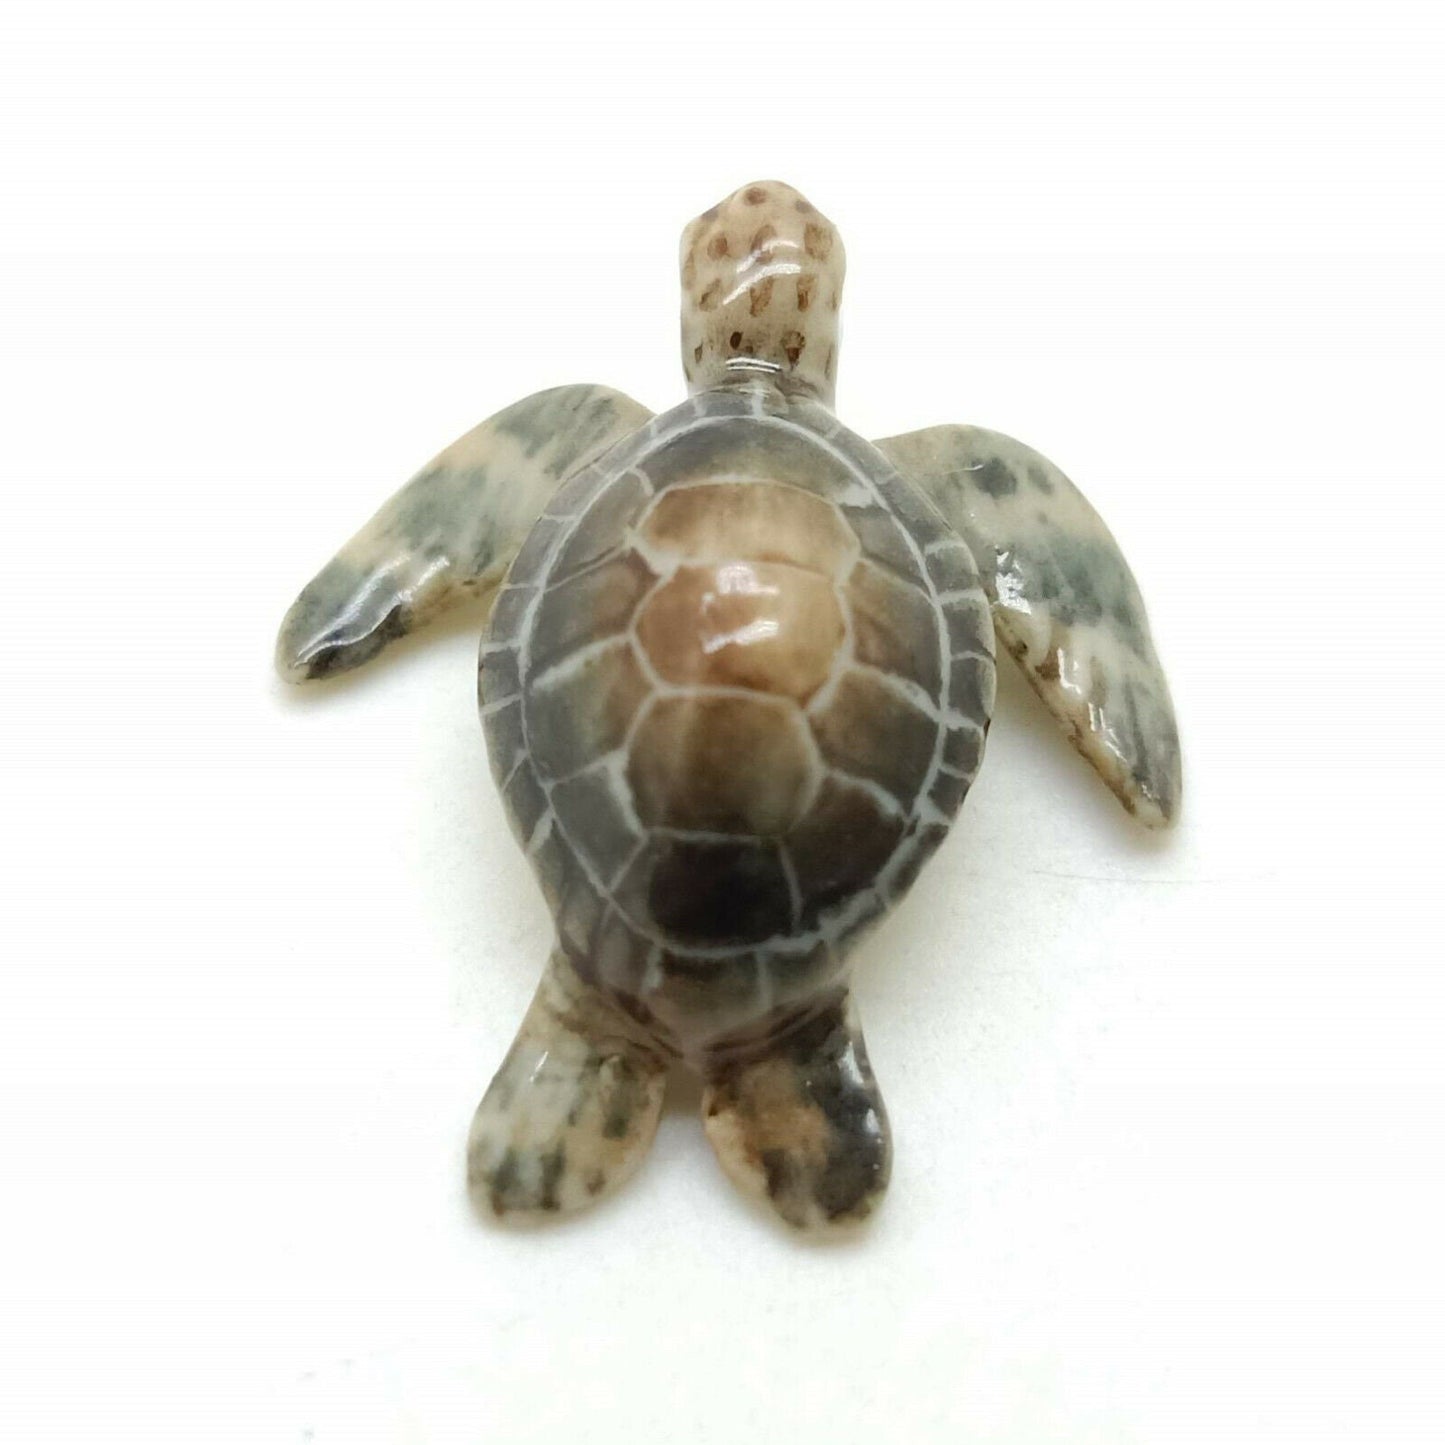 Set of 2 Tiny Sea Turtle Figurine Ceramic Statue